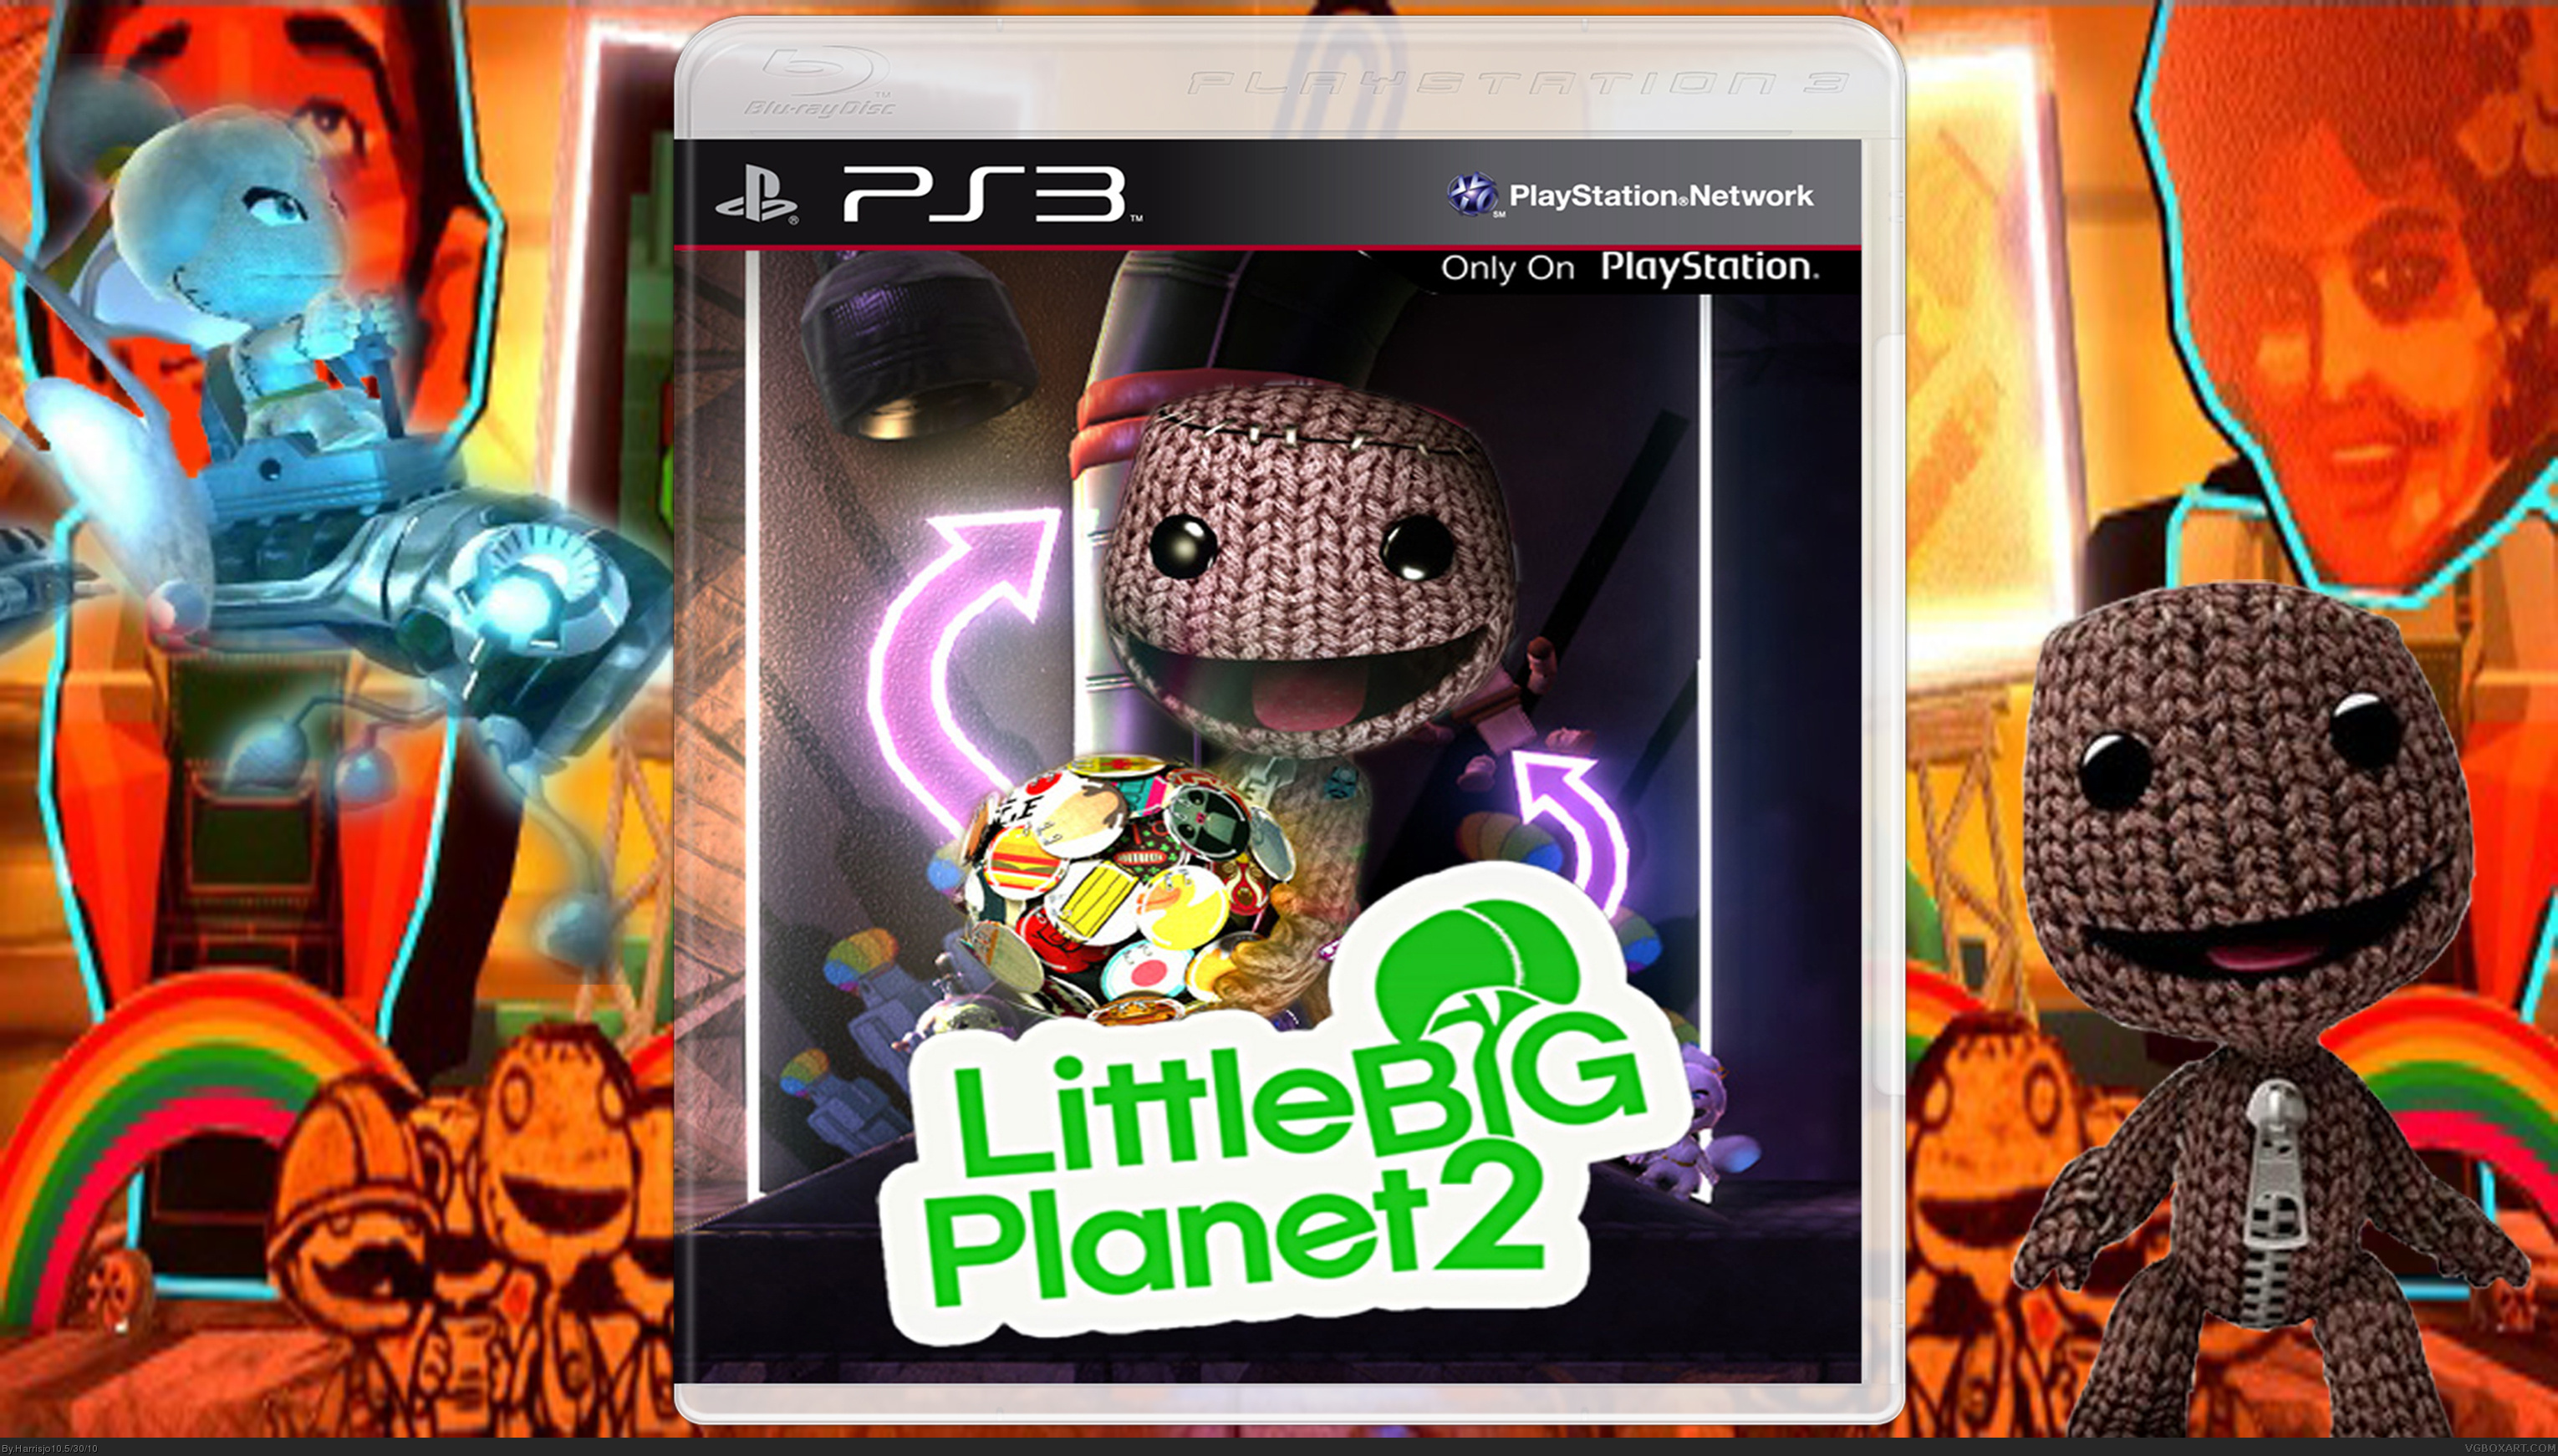 LittleBigPlanet 2 box cover